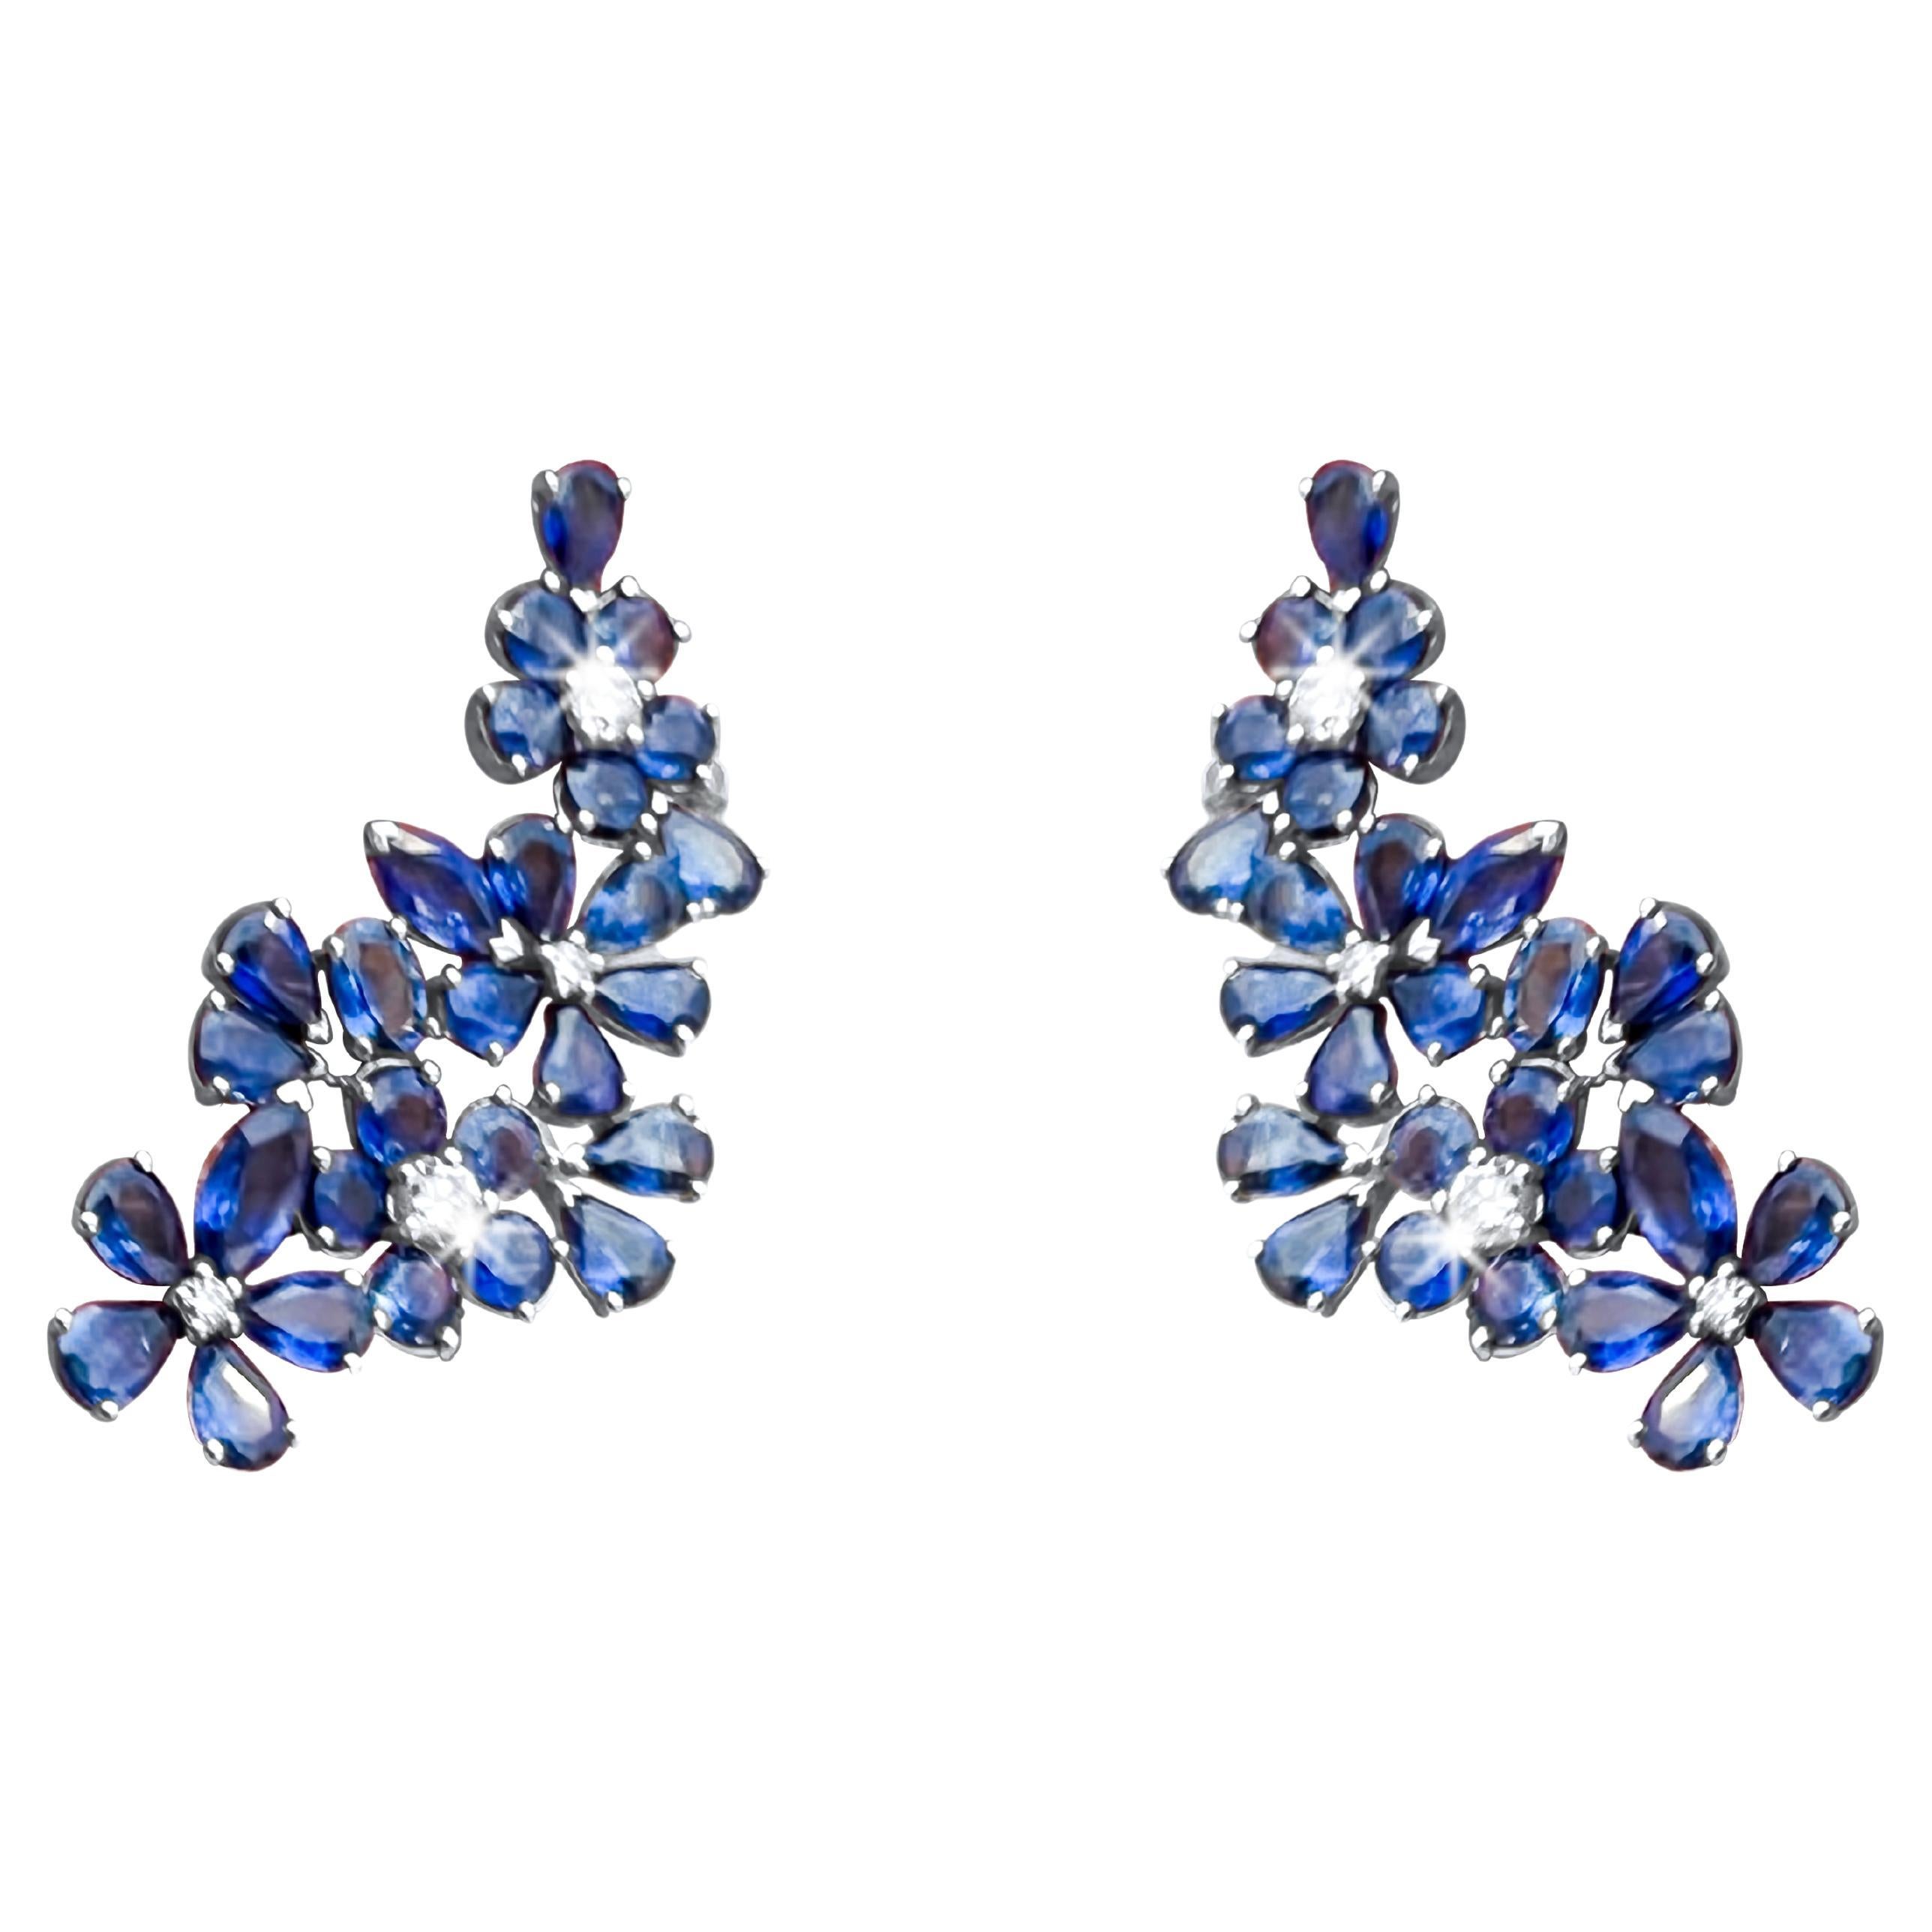 Sophia's Diamonds and Sapphires Earrings